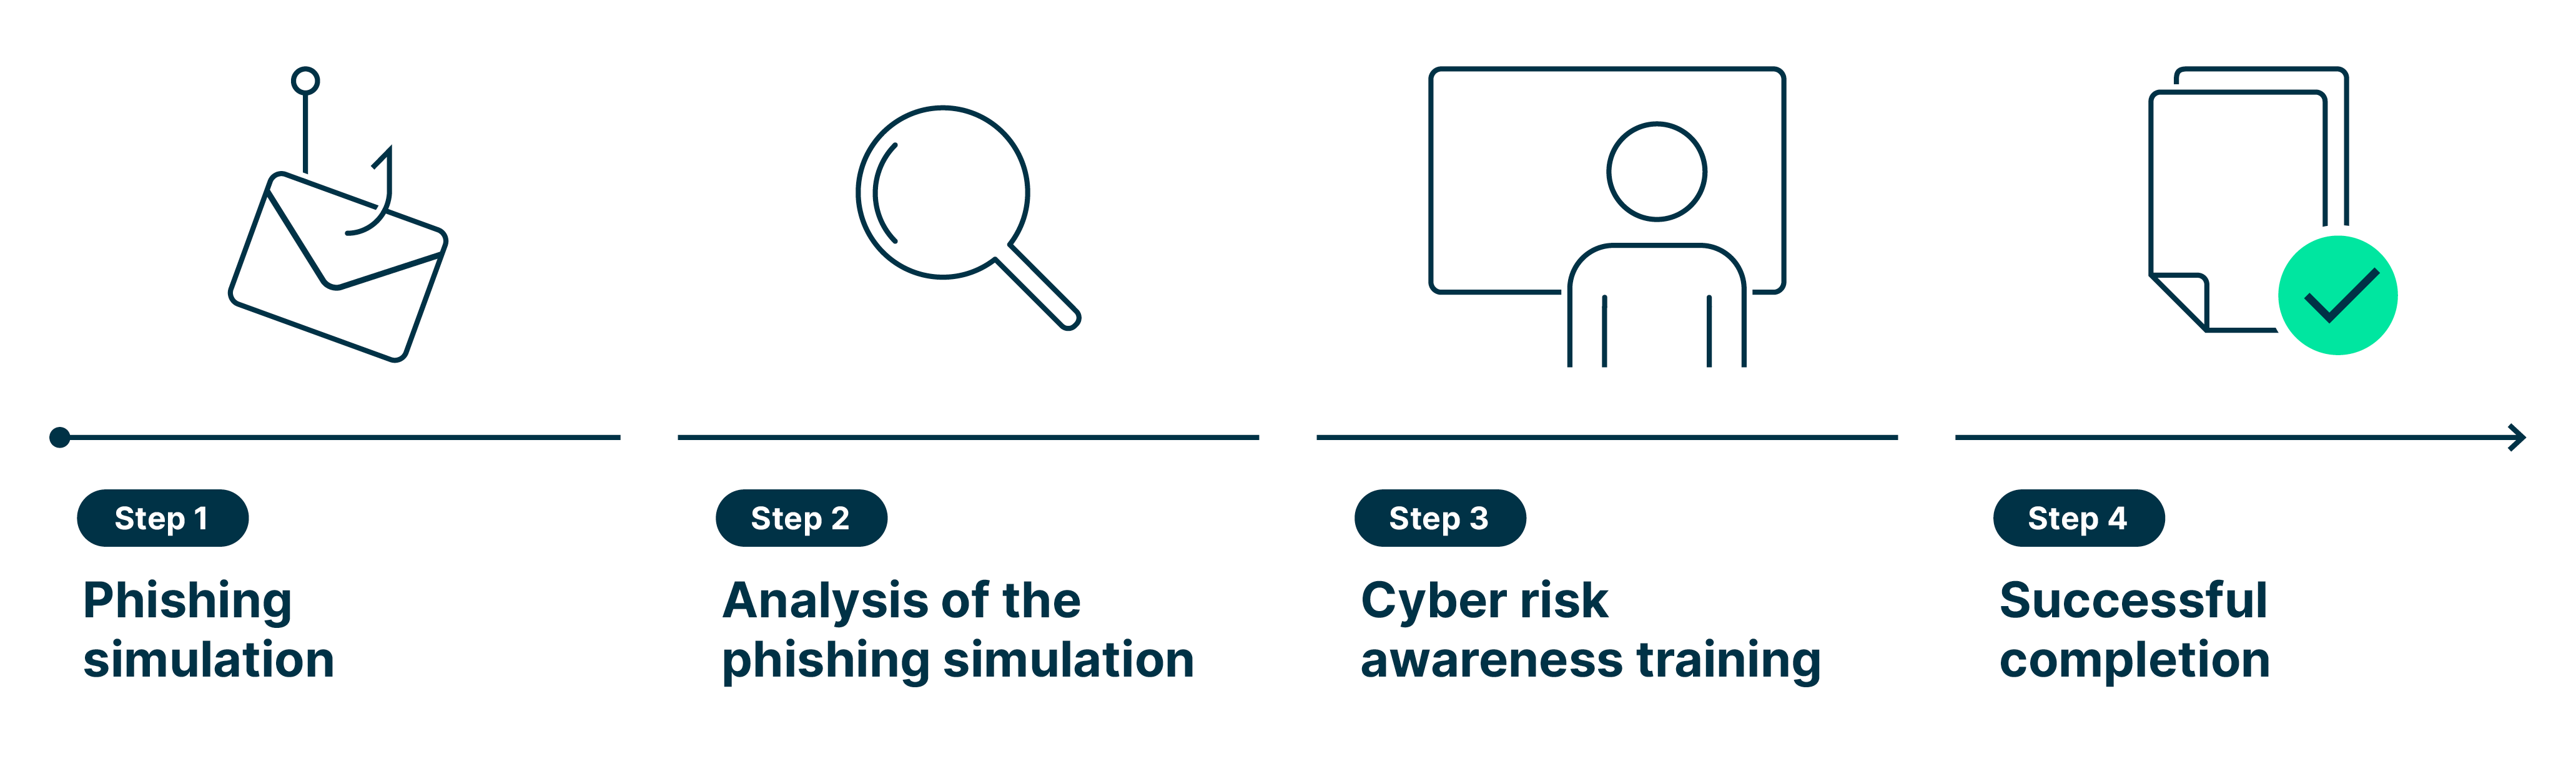 cyber_risk_awareness_training_graphic_en